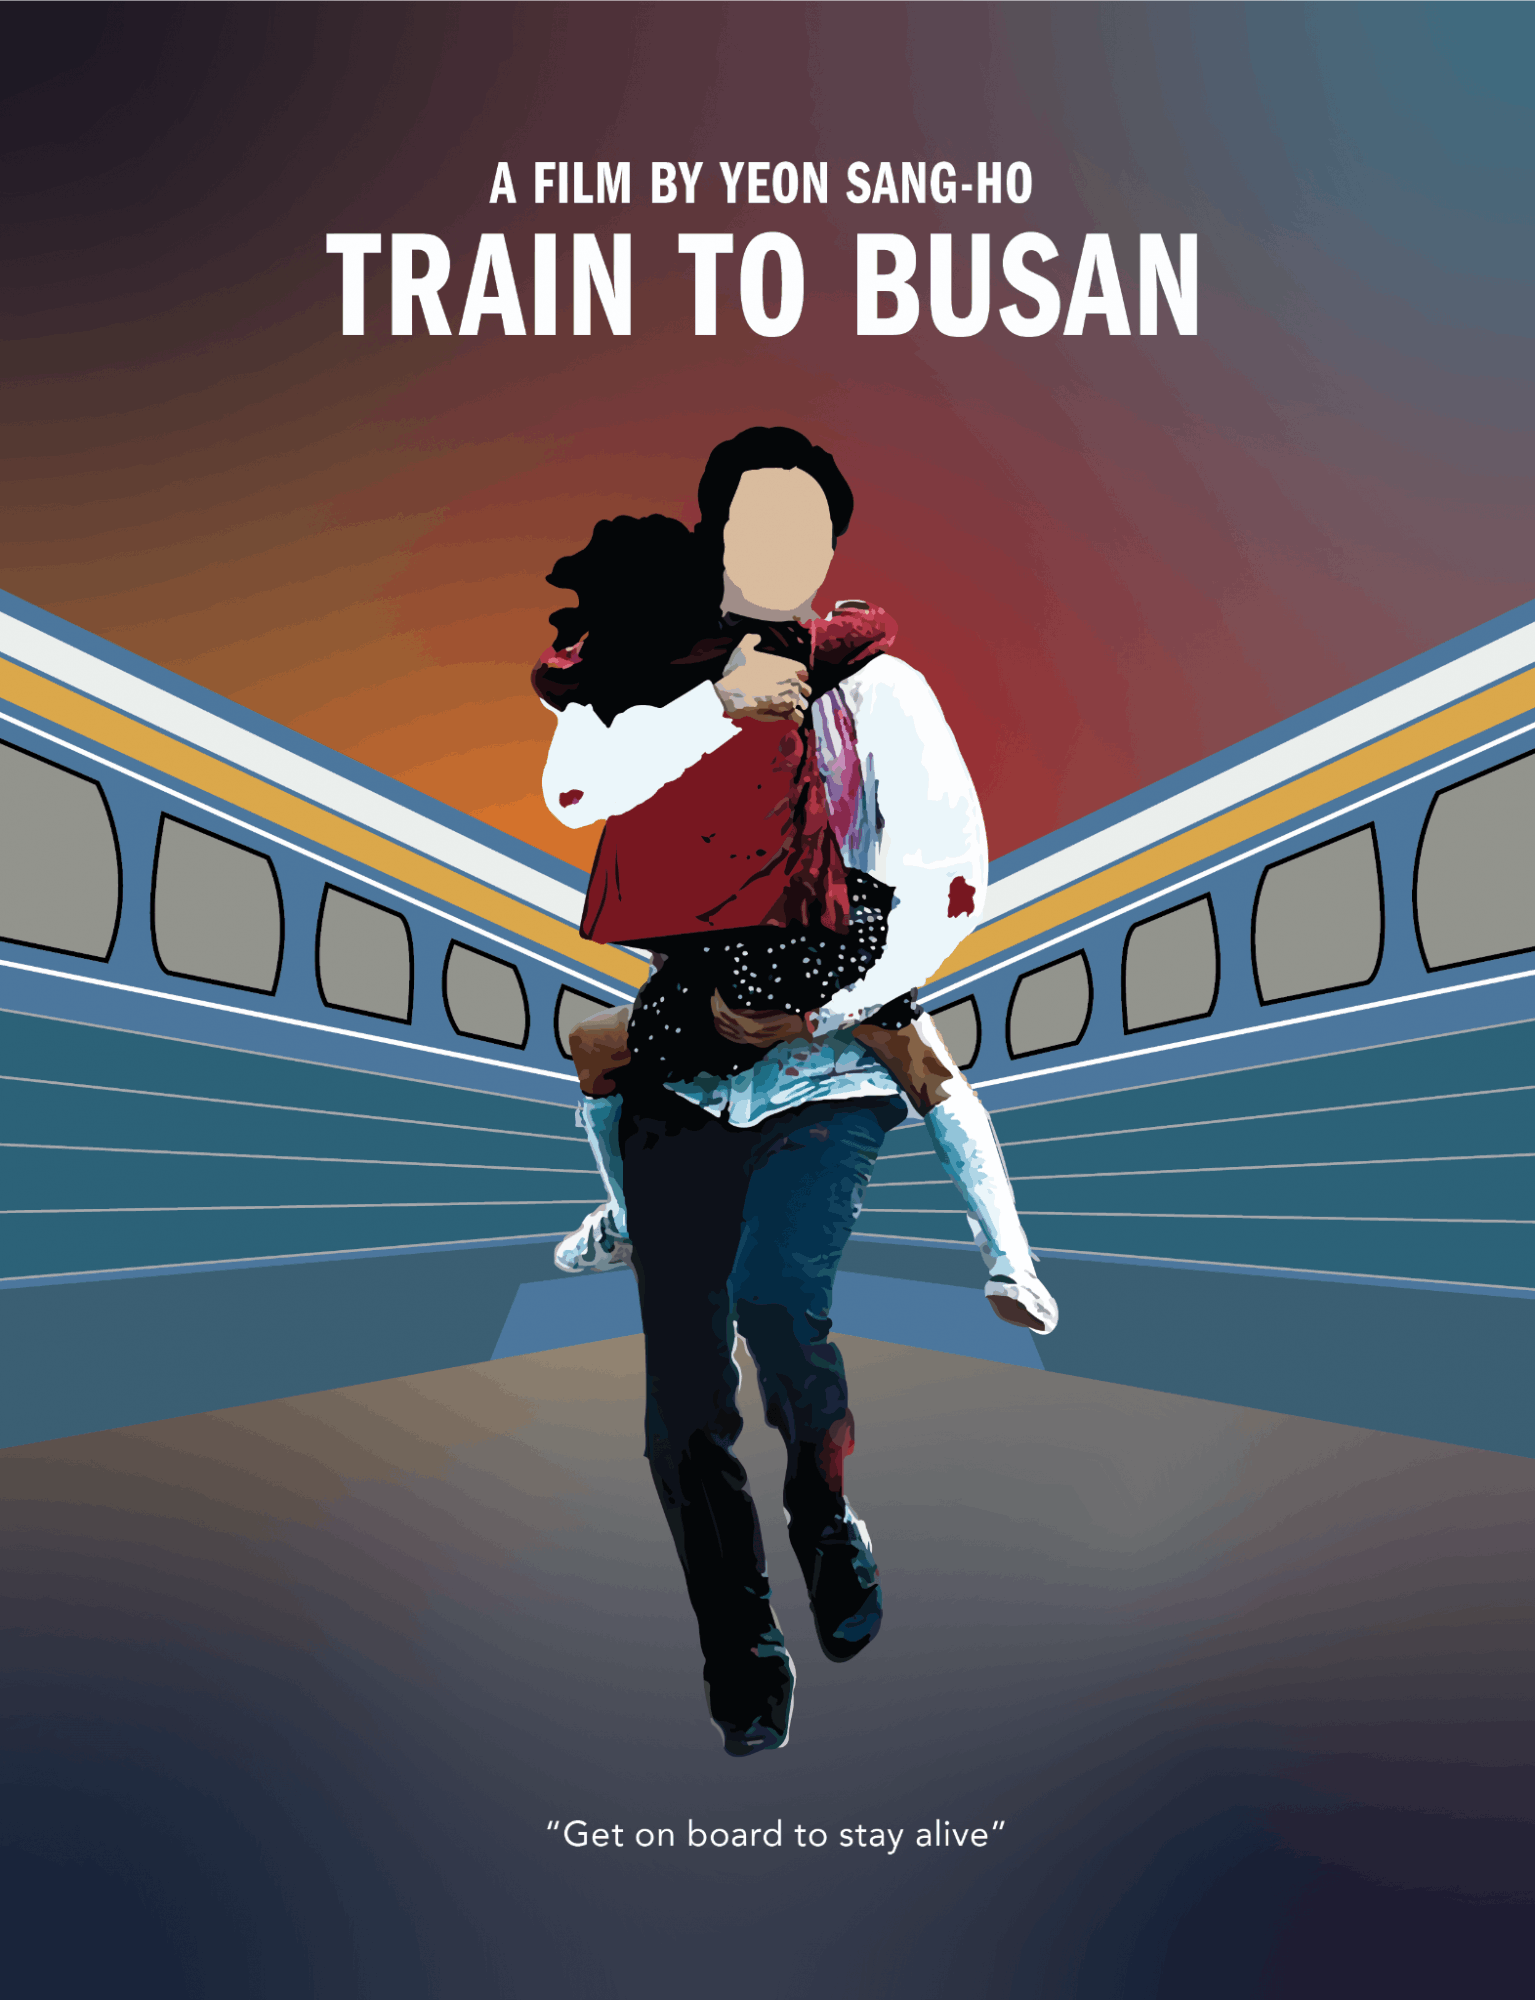 where can i watch train to busan free